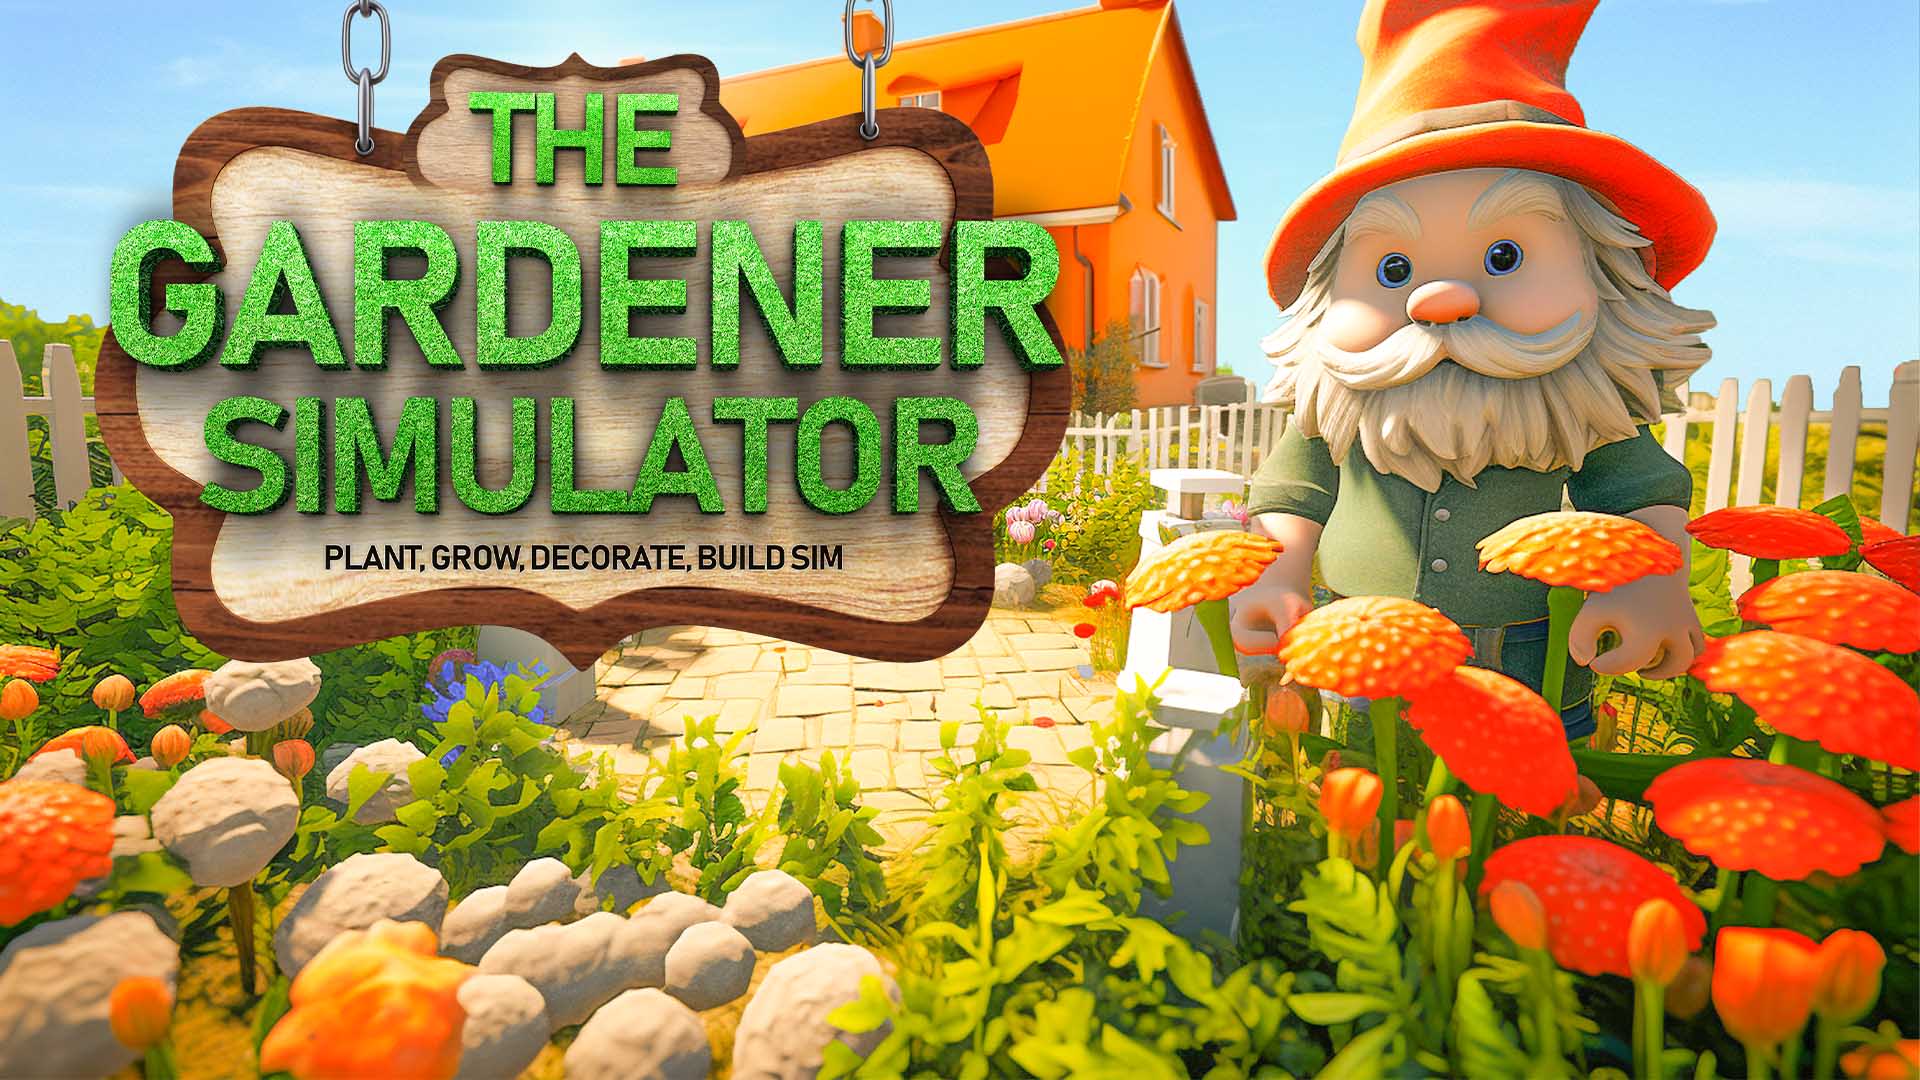 The Gardener Simulator - Plant, Grow, Decorate, Build Sim